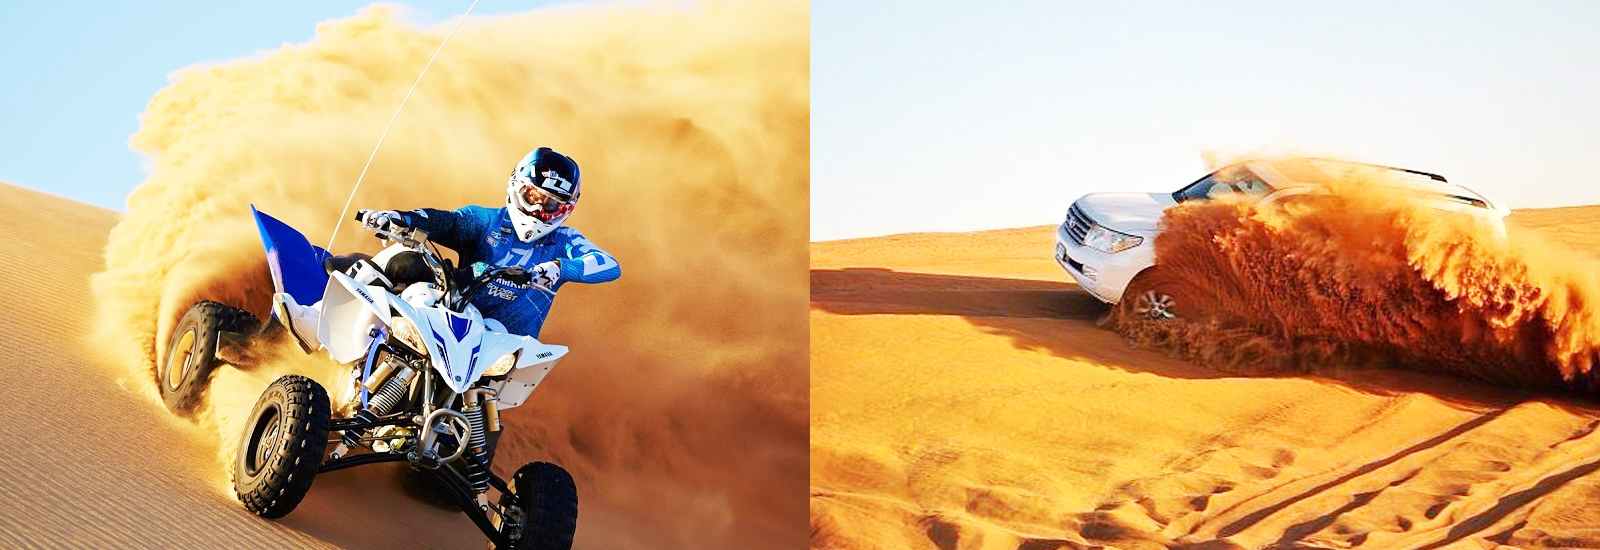 Desert safari and Quad bike riding in Dubai 